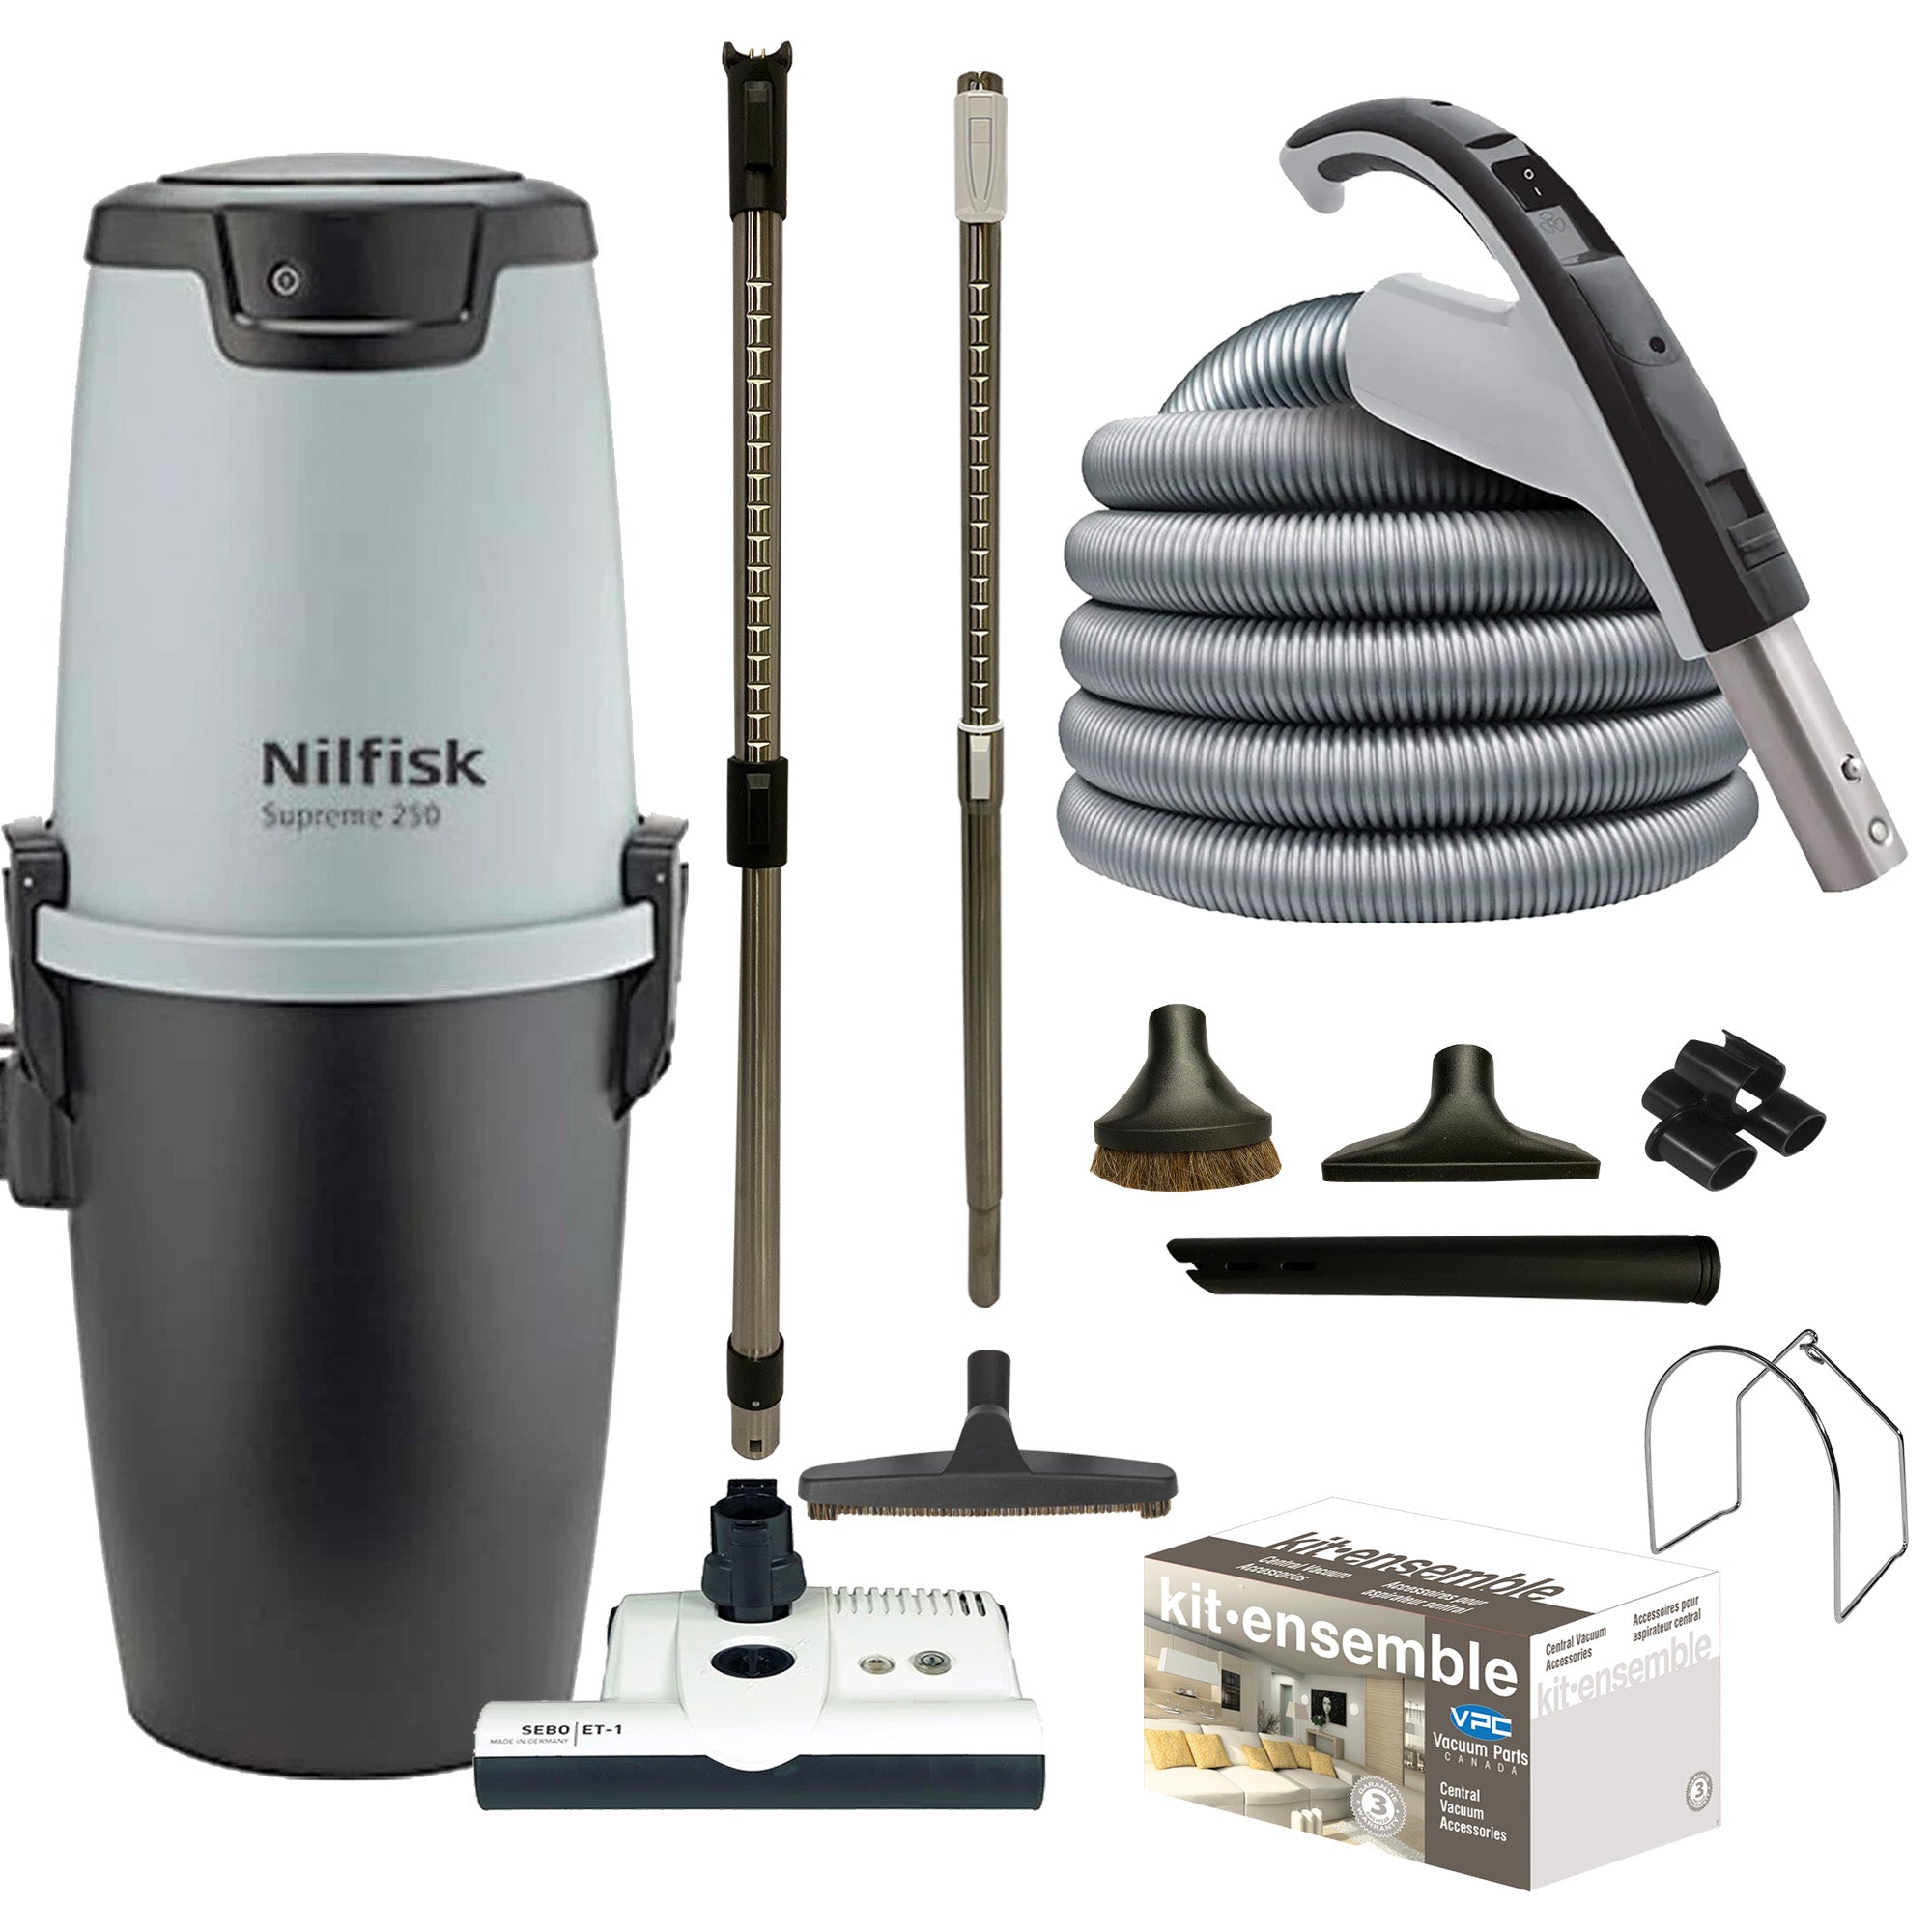 Nilfisk Supreme 250 Central Vacuum with SEBO Premium Electric Kit